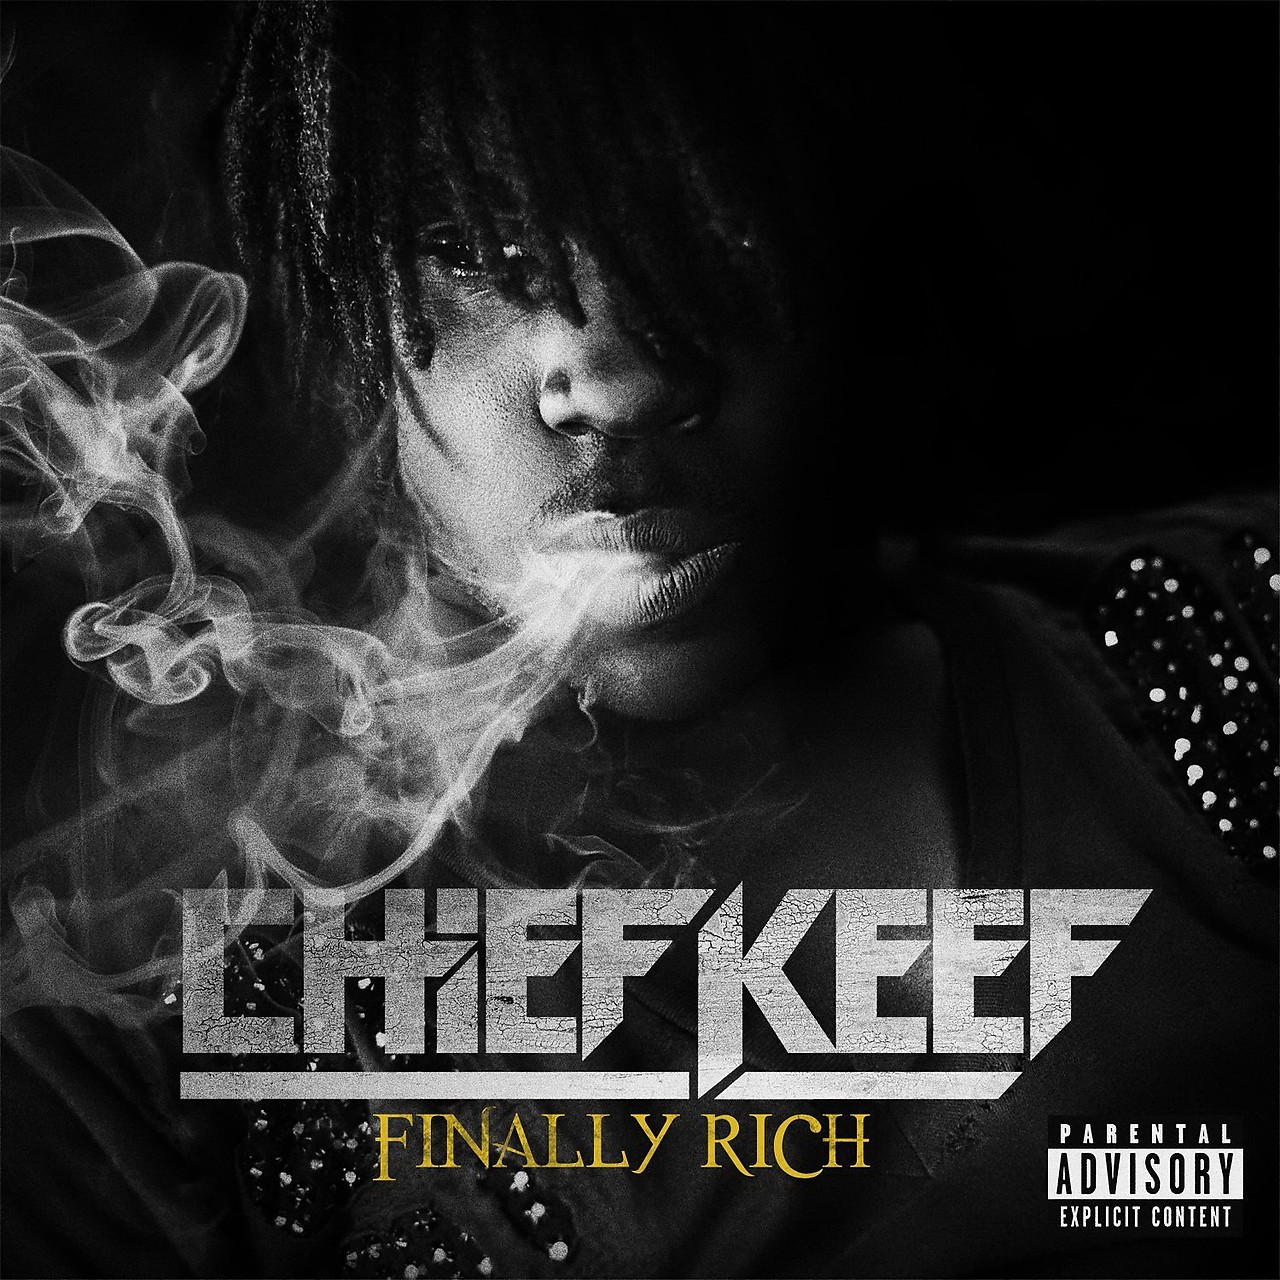 chief keef finally rich mixtape playlist